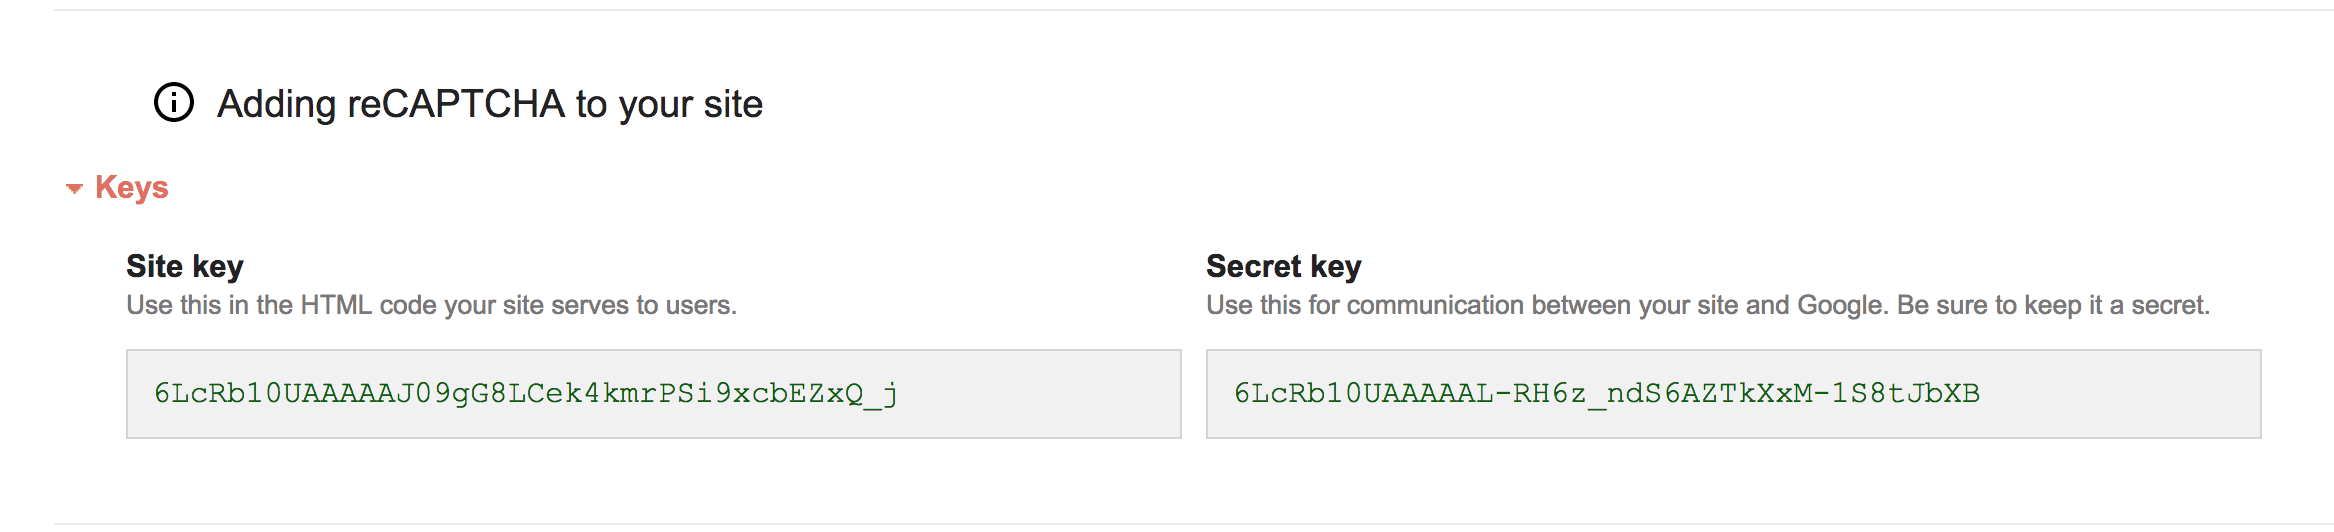 Site Key and Secret Key